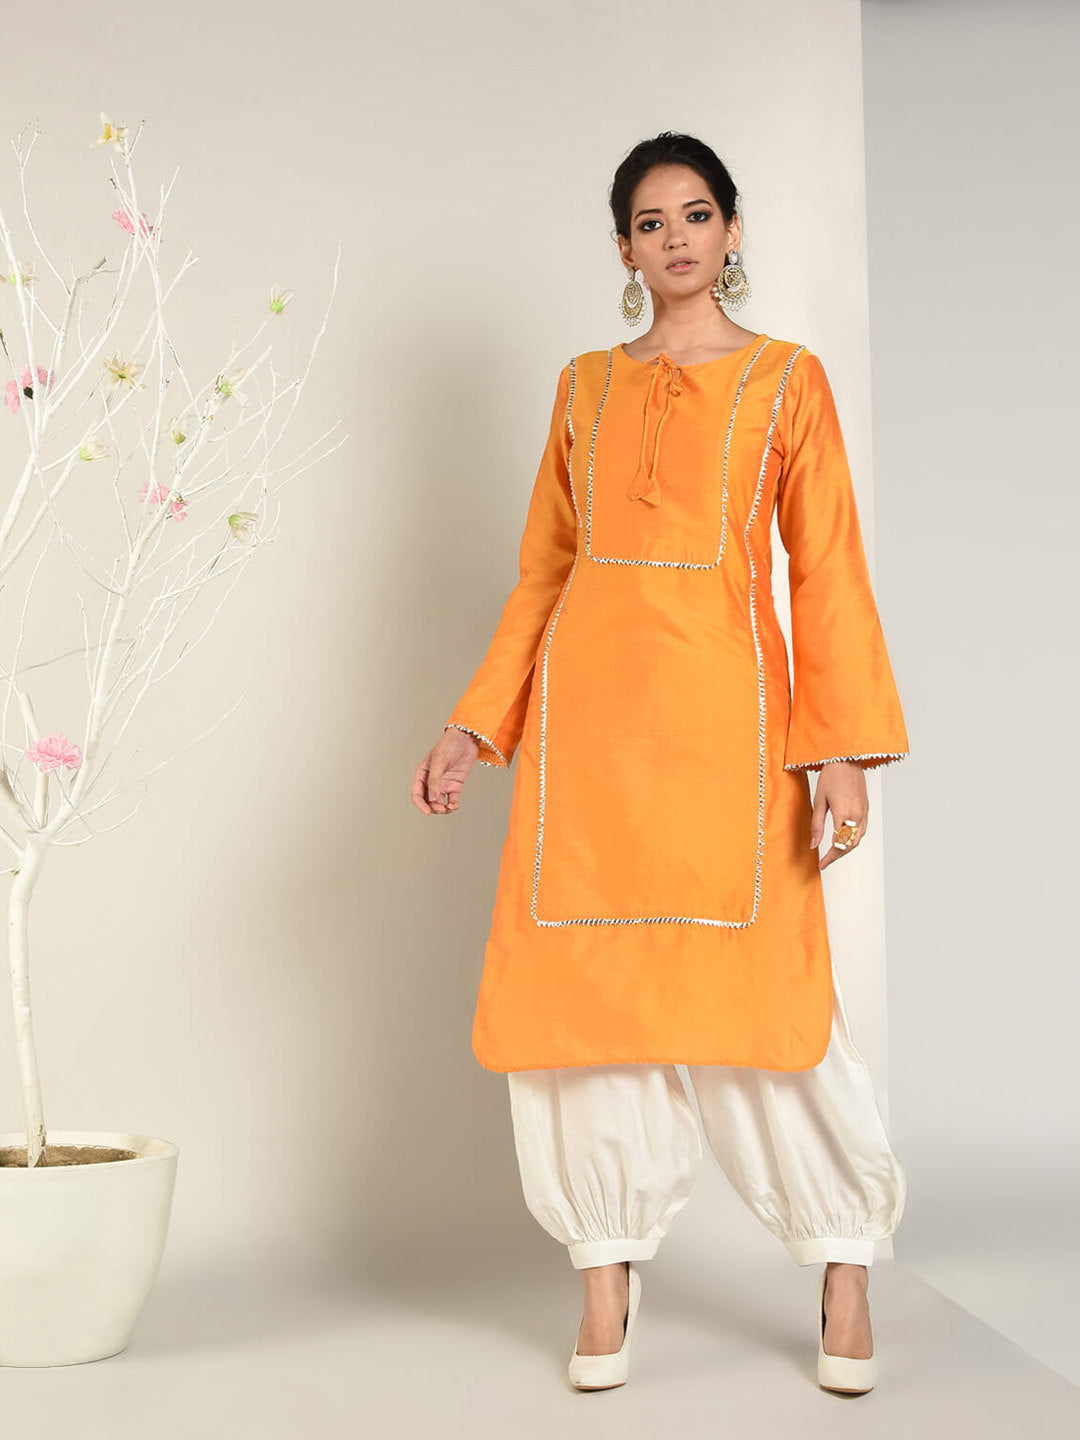 Handmade Ethnic Wear Pathani Suit Latest Design Kurta Pajama, Wedding Party  Festivals Season Ethnic Party Dress Outfit Wedding Kurta Pajama - Etsy